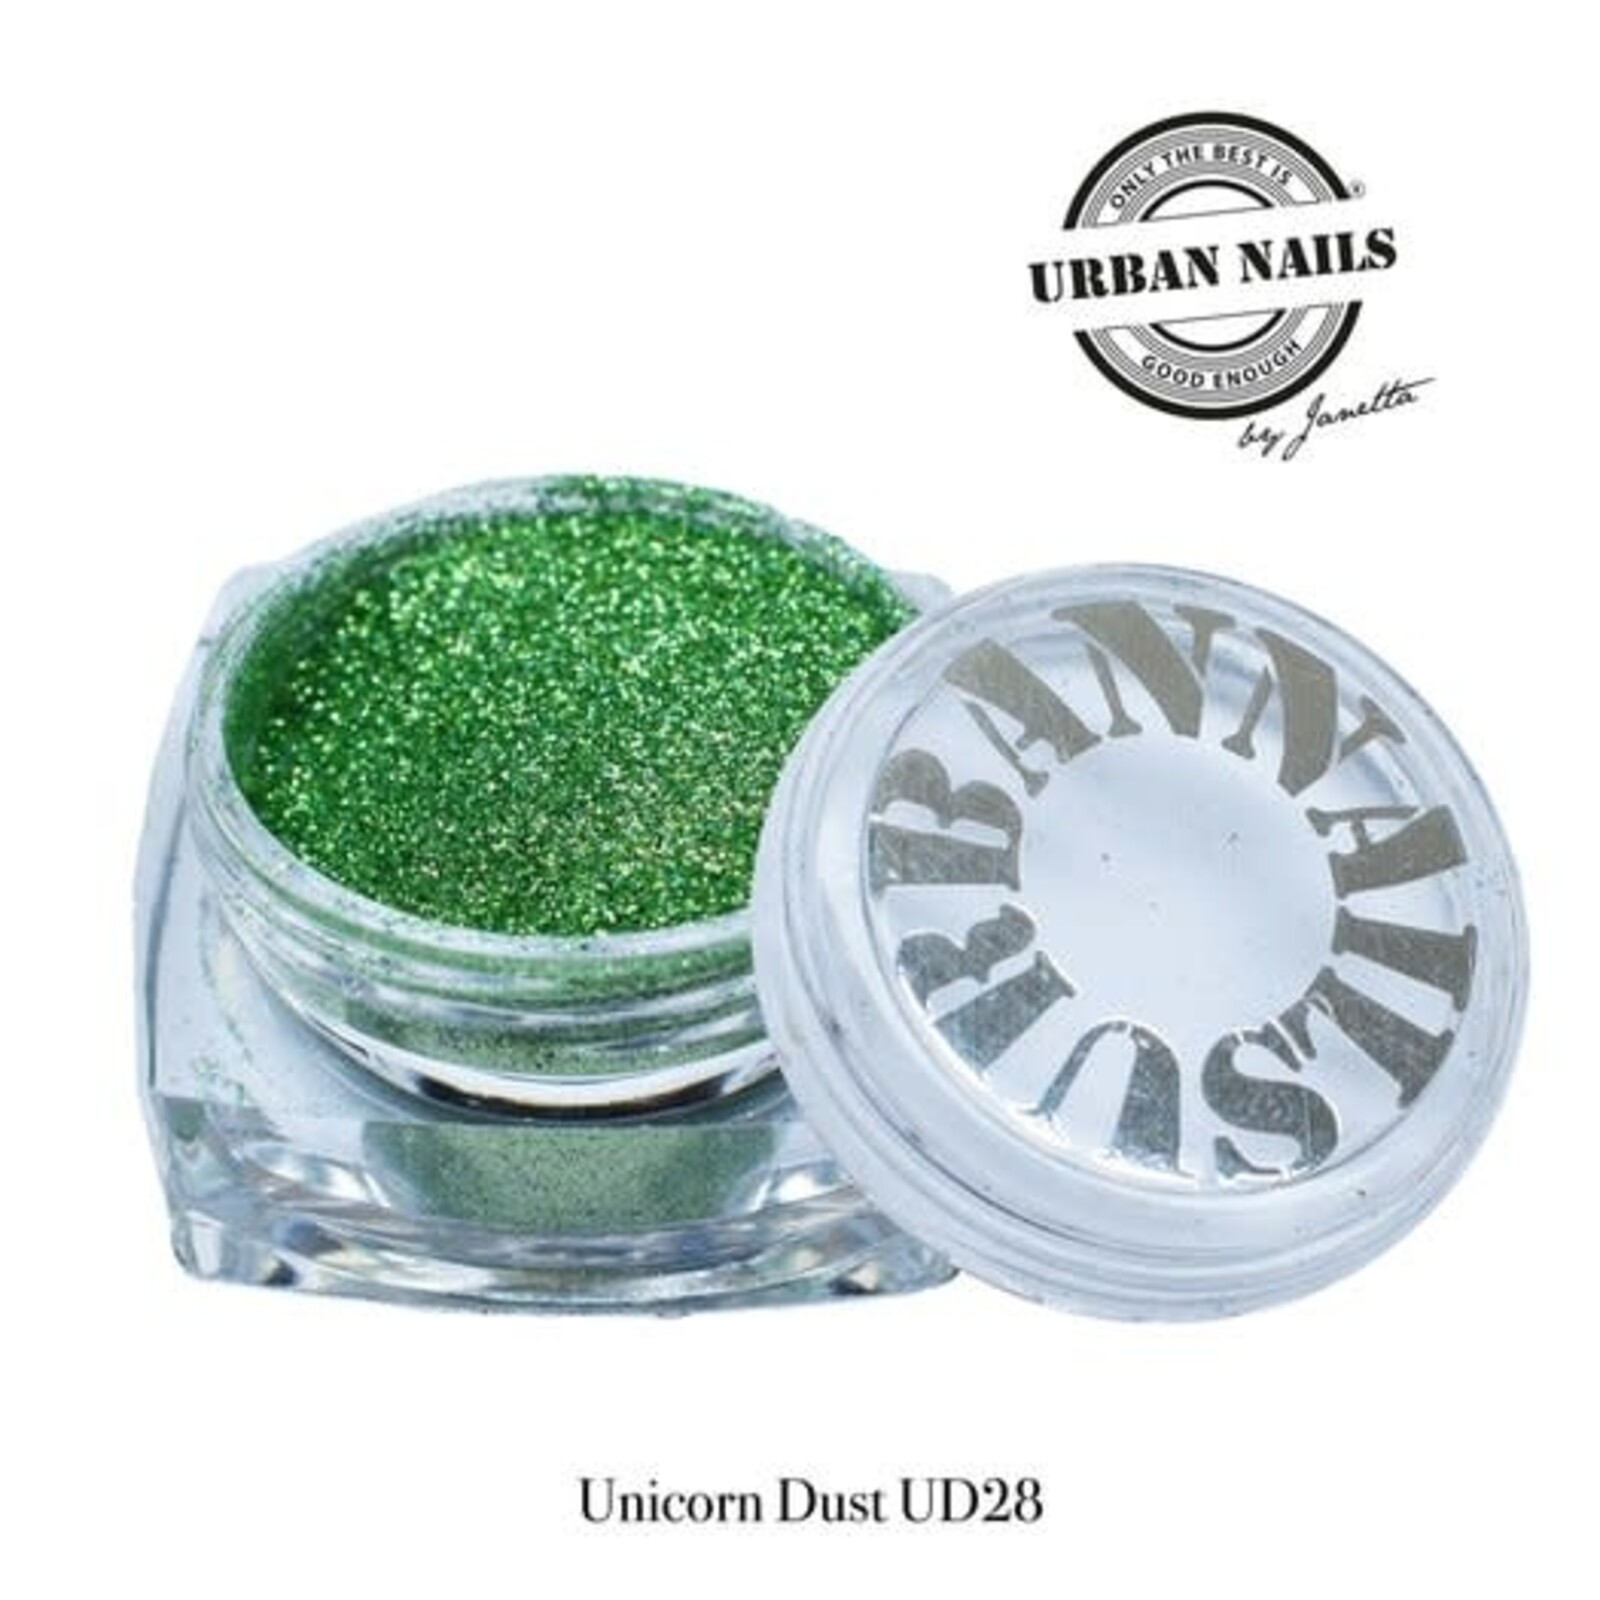 Urban nails Unicorn Dust UD28